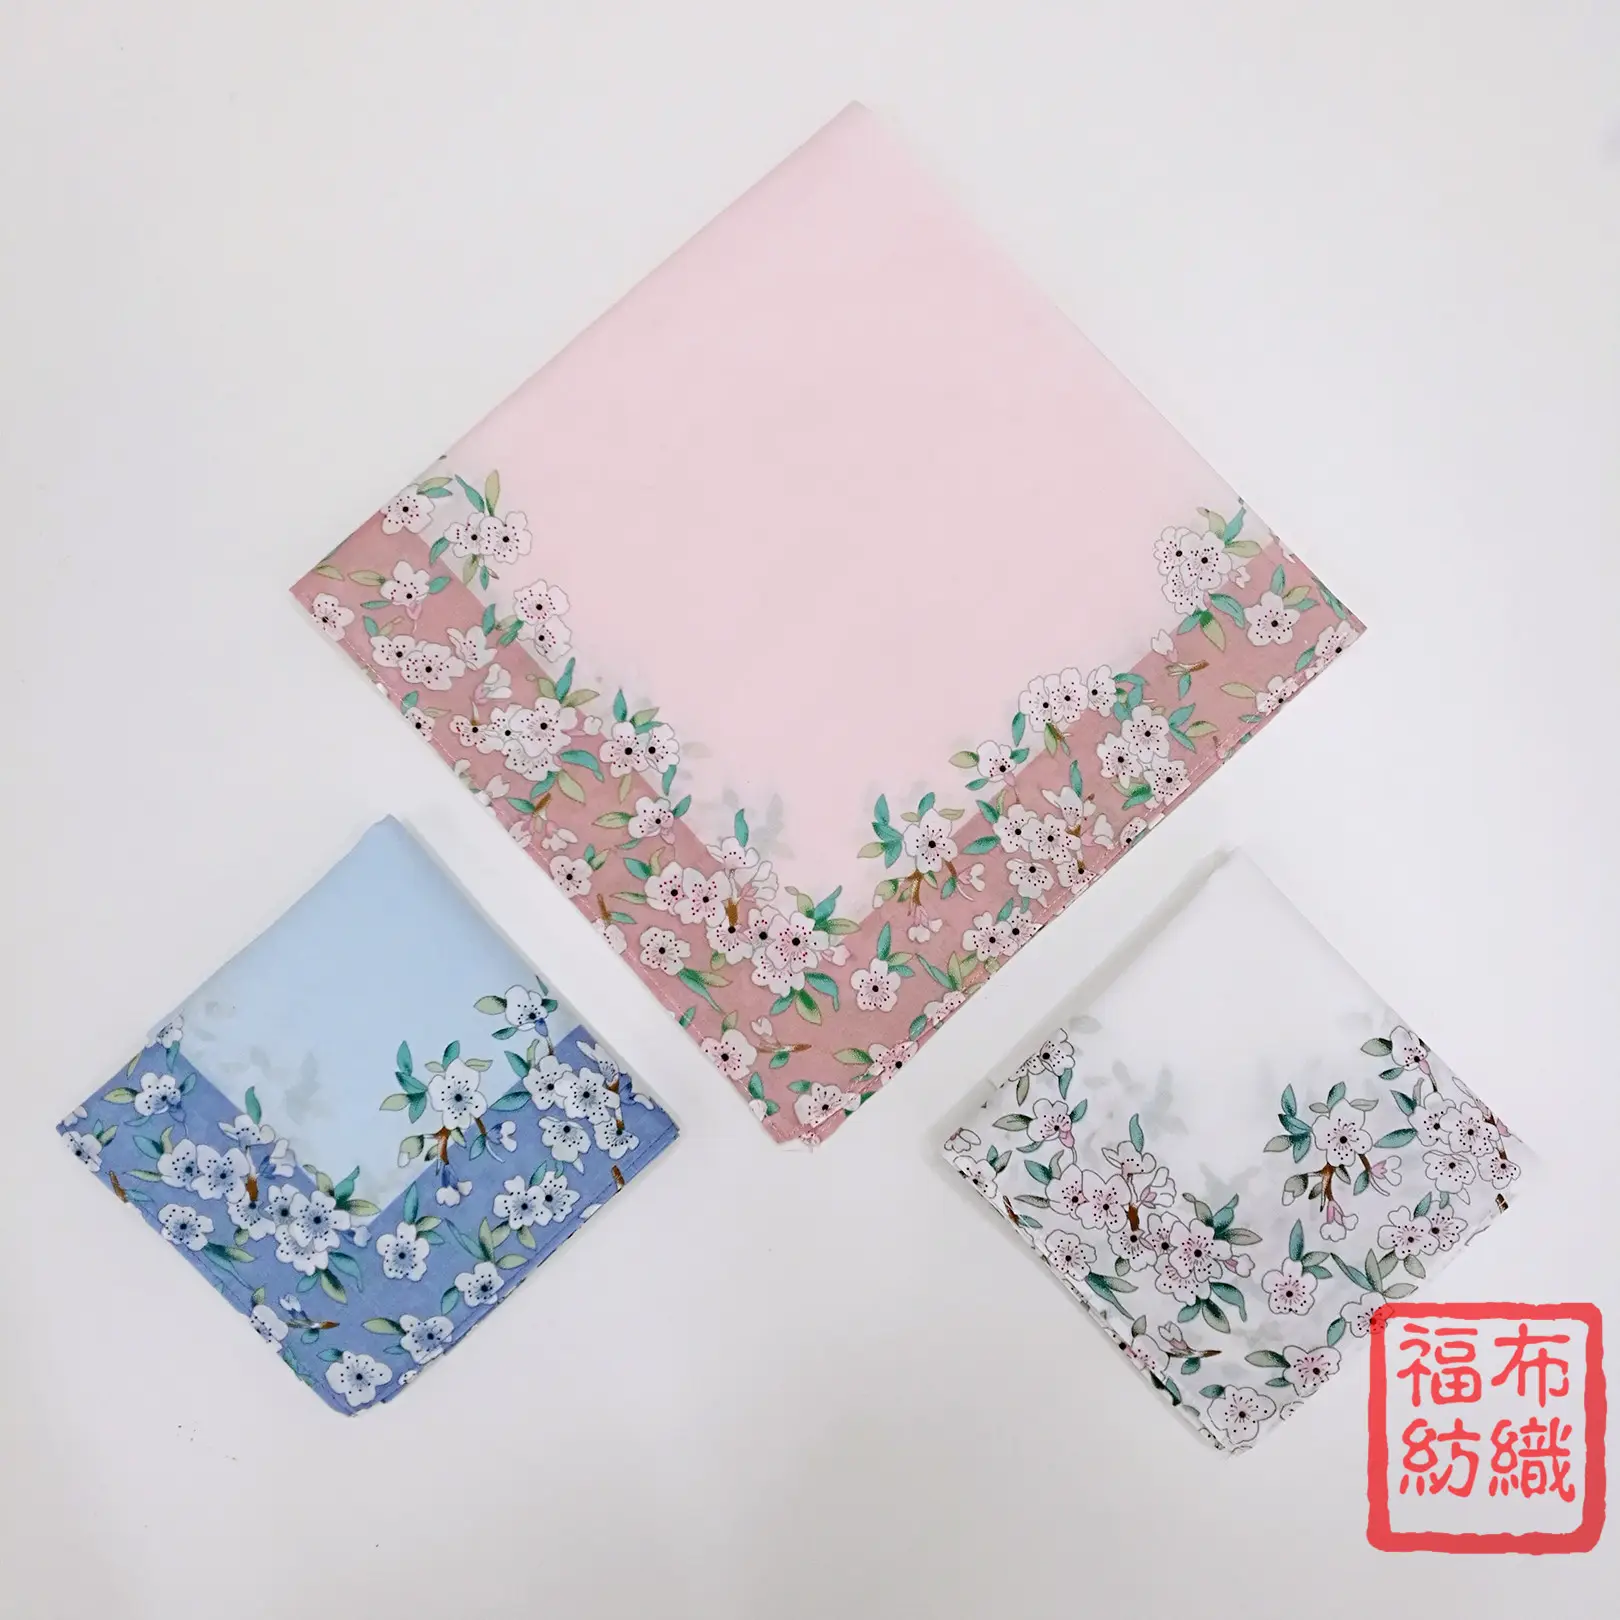 women cotton handkerchiefs floral style wholesale cheap cotton high quality handkerchiefs manufacturer for wedding handkerchief